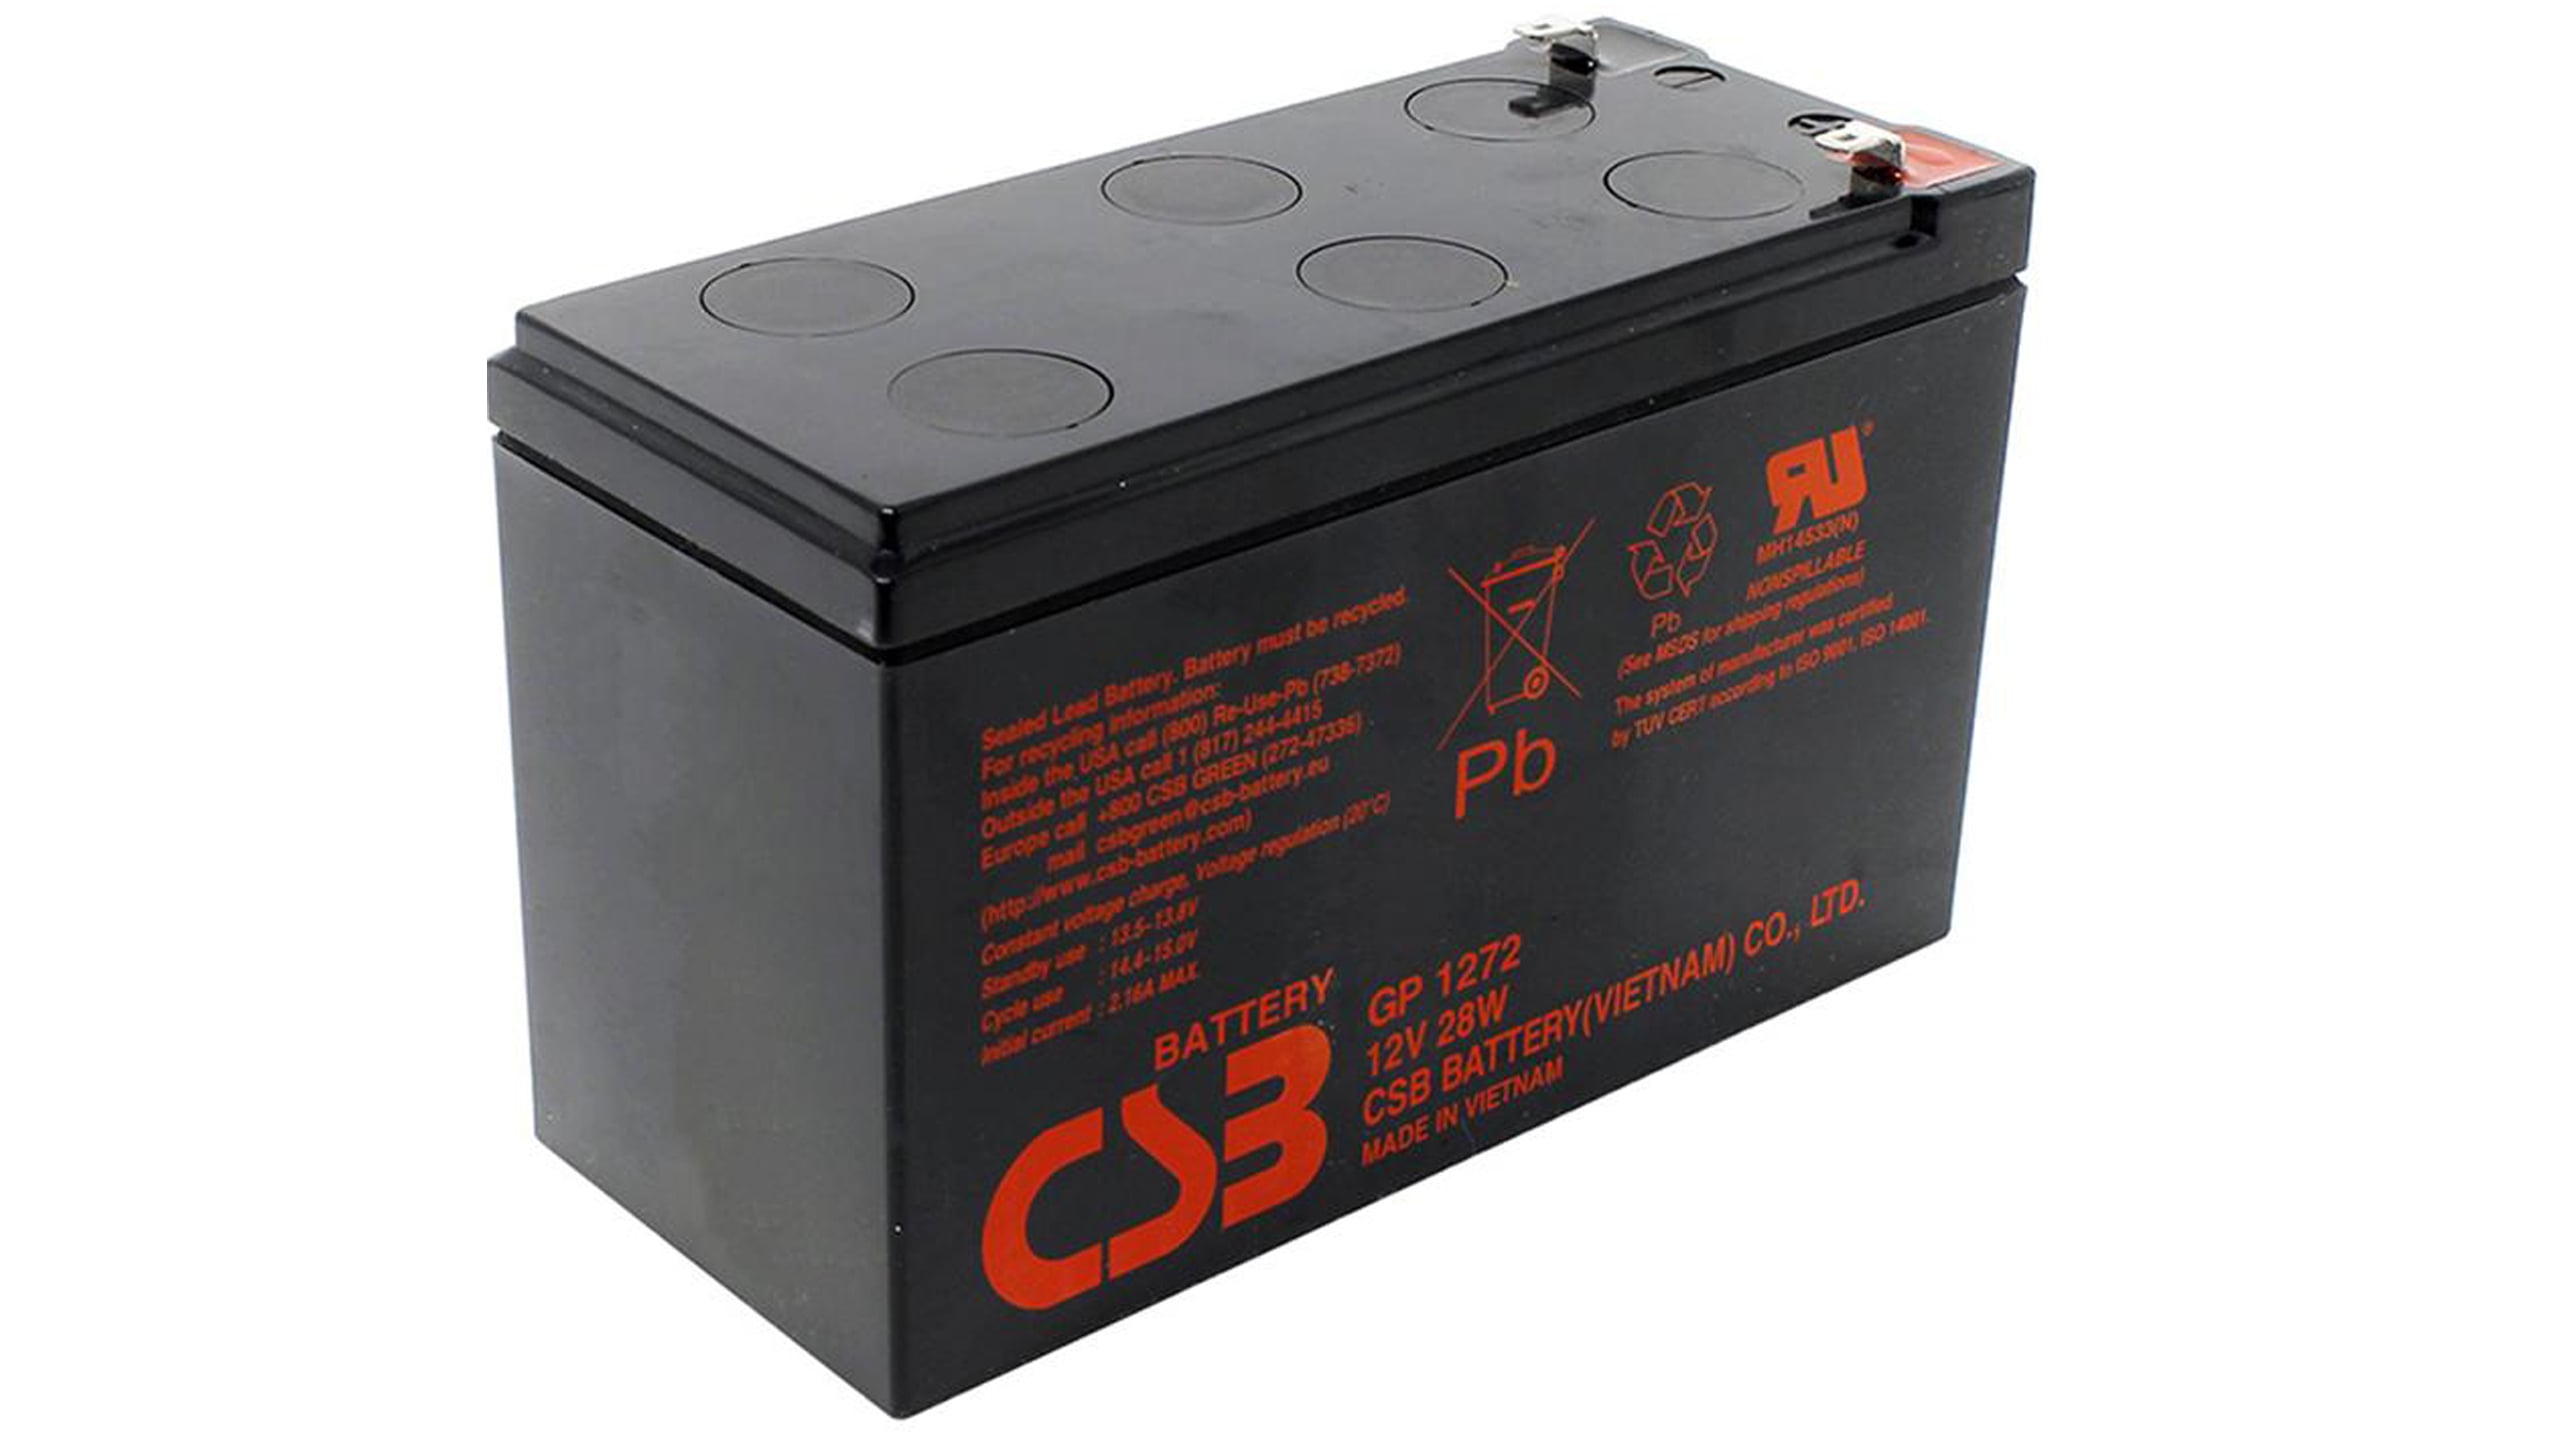 Gp 1272 f2 12v. Батарея аккумуляторная CSB gpl1272 f2. CSB GP 1272 f2. Аккумулятор CSB GP 1272, 12v 7 Ah f2. Батарея аккумуляторная CSB gp1272 (12v/7.2Ah).